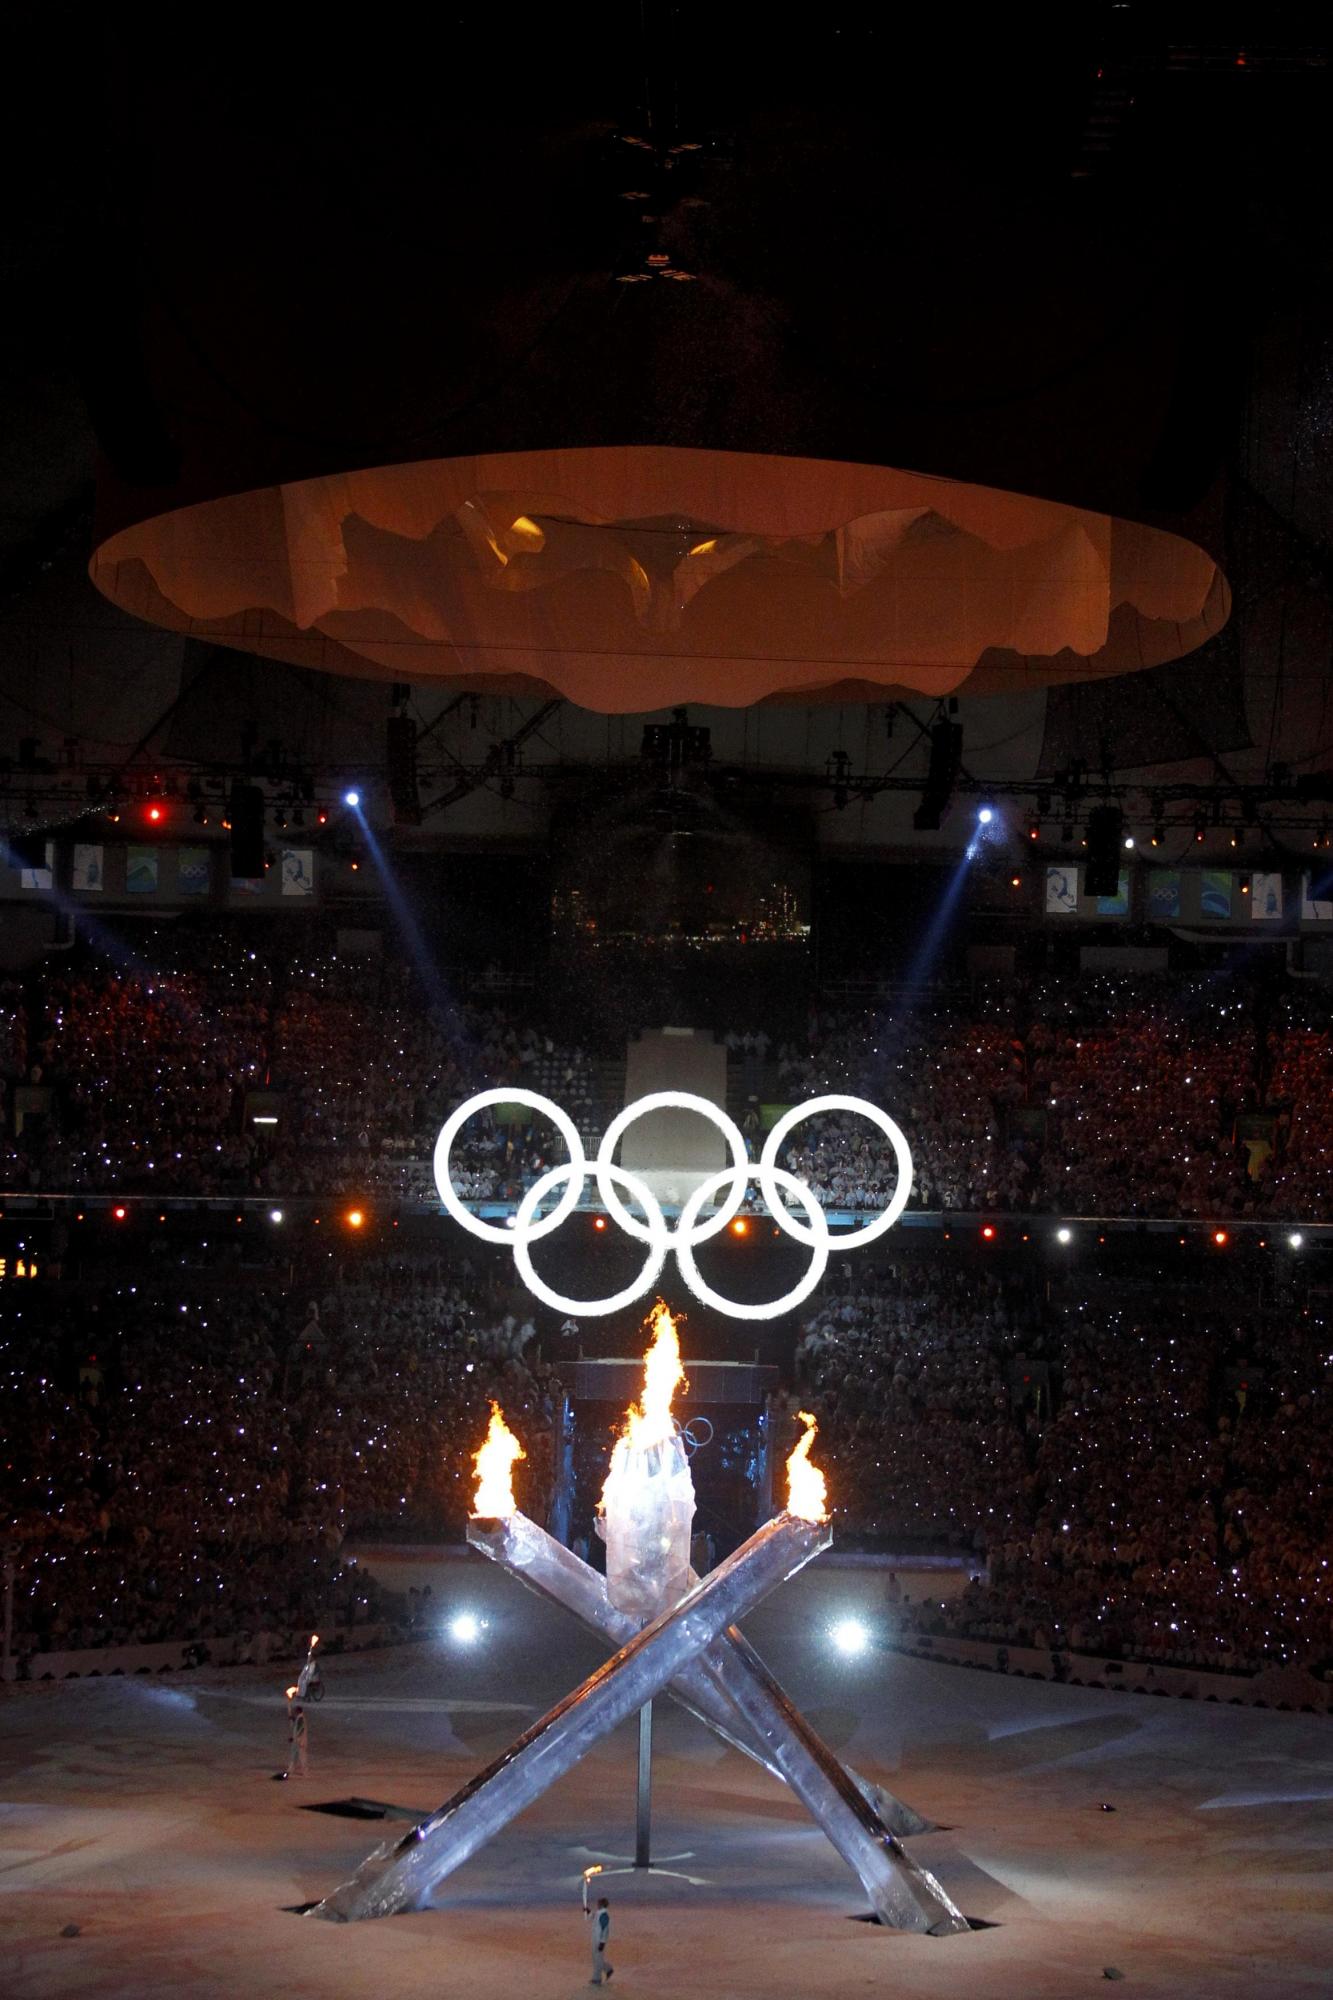 Vancouver unveils 2010 Winter Olympics